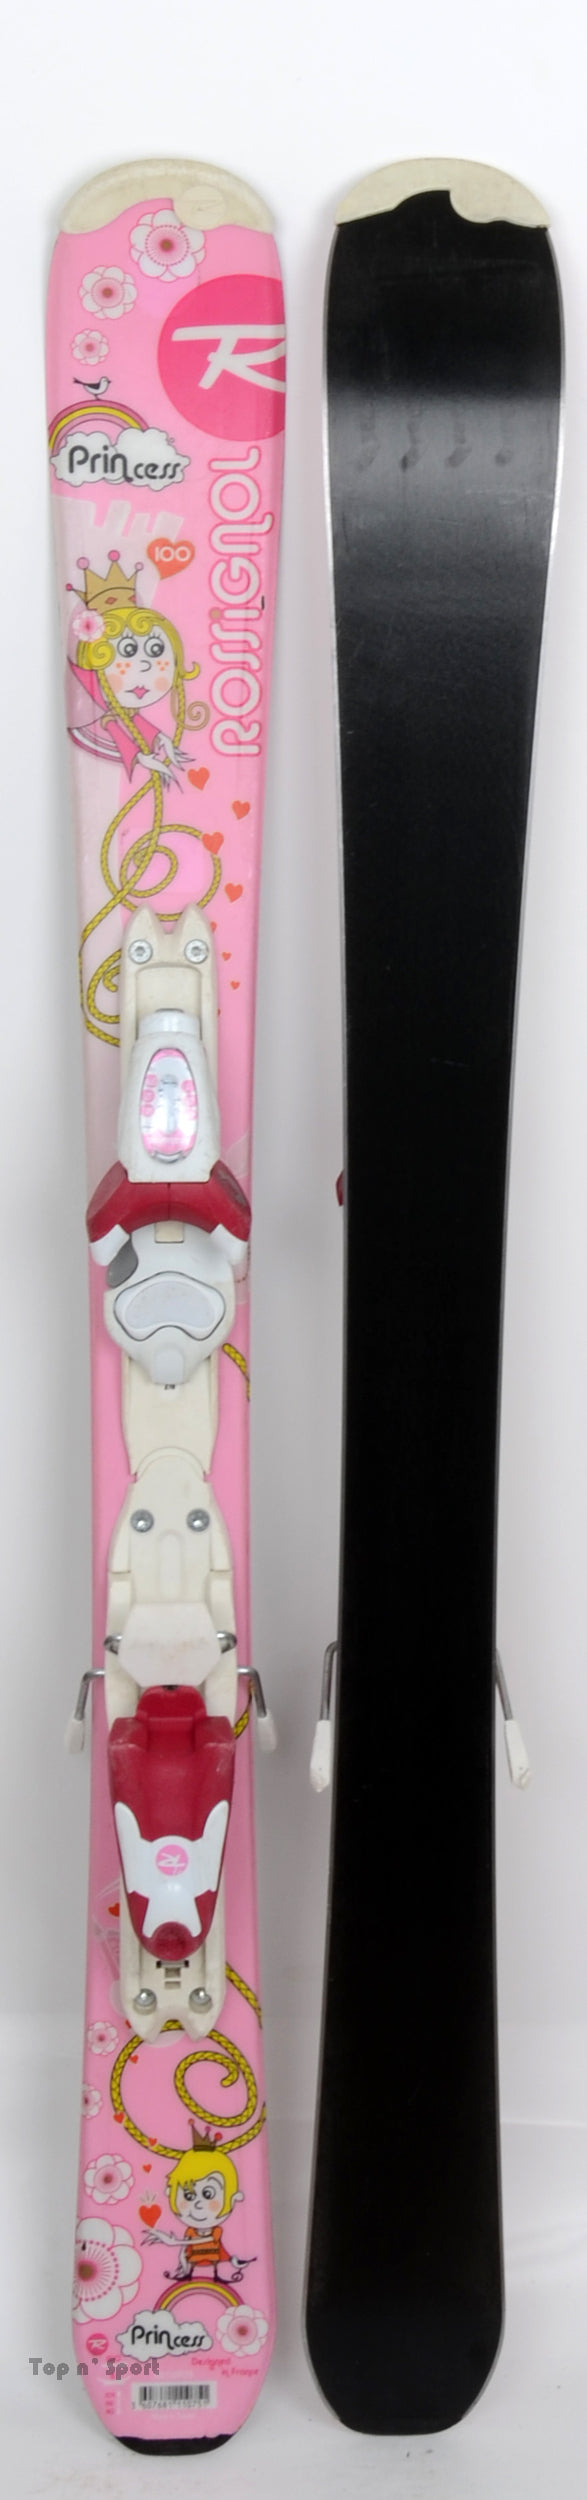 Rossignol PRINCESS pink - skis d'occasion Junior